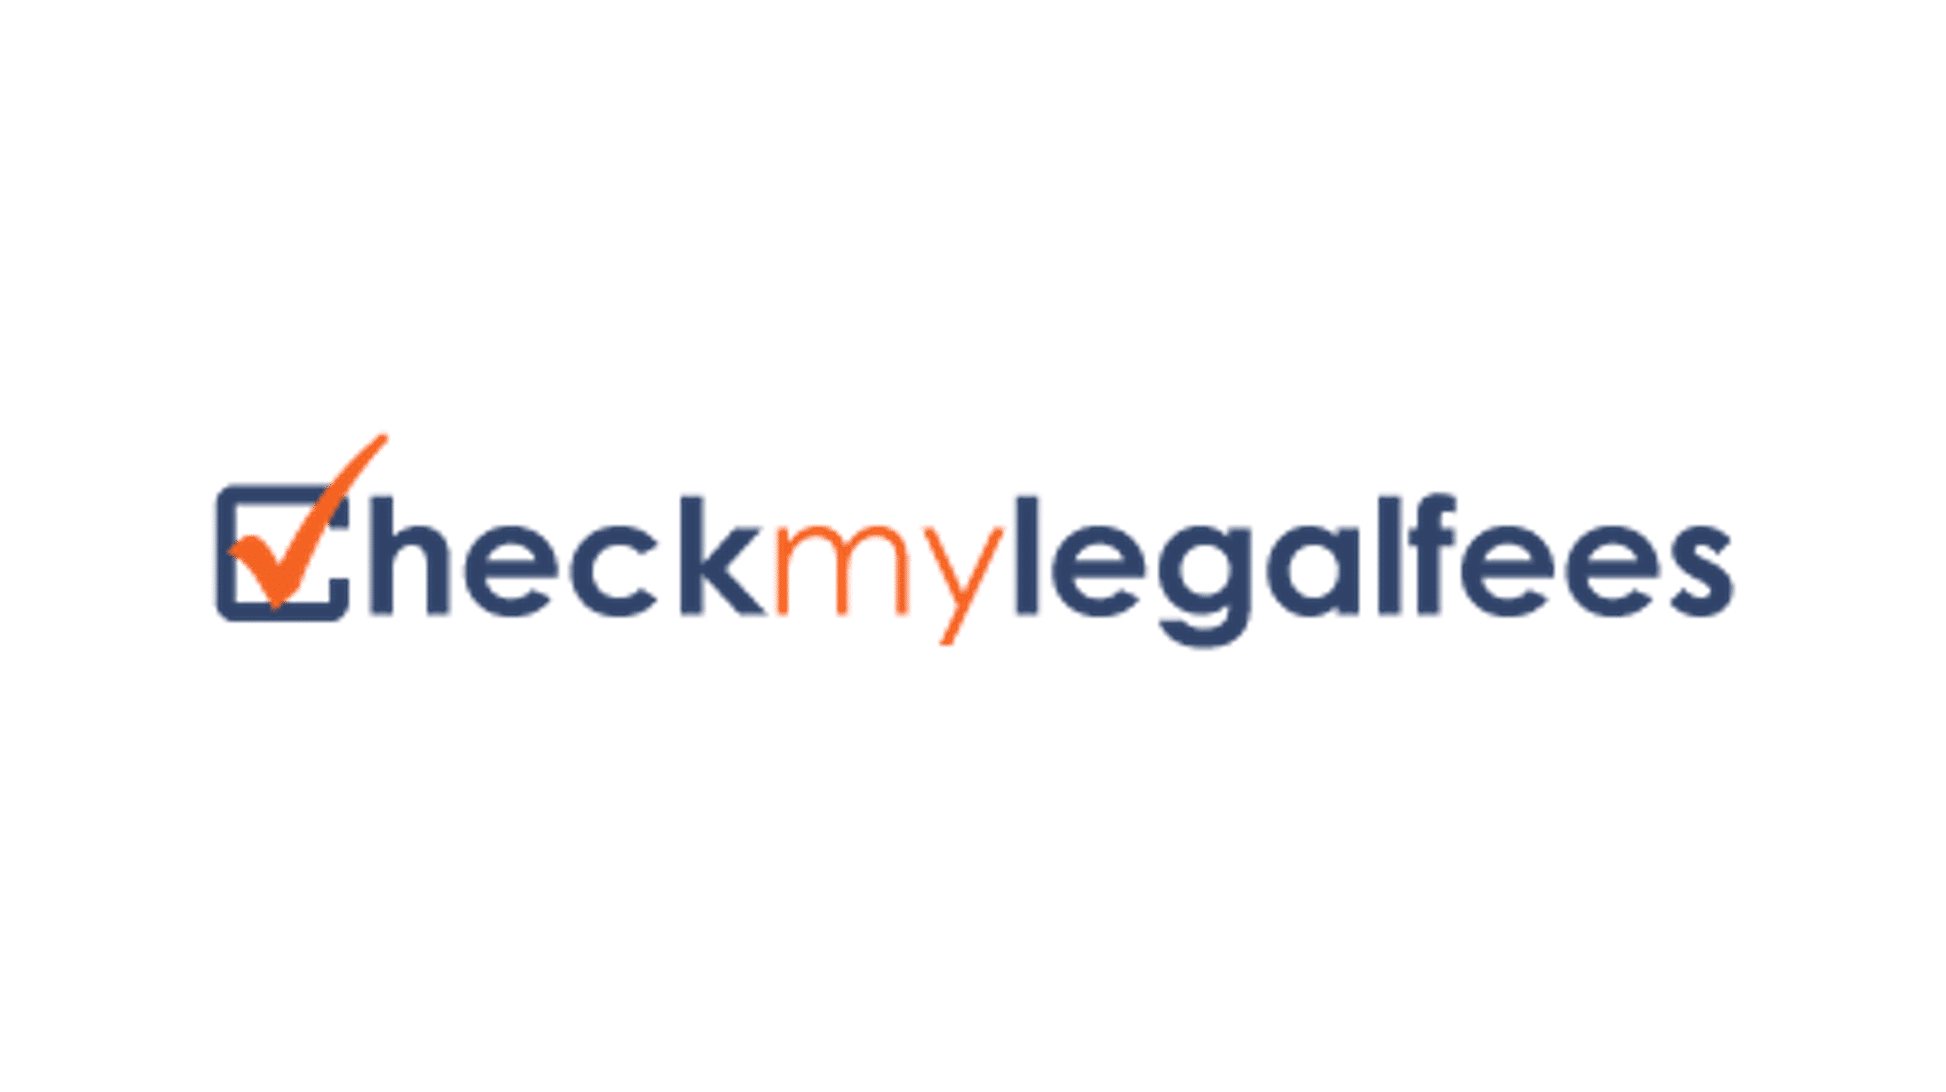 Check-My-Legal-Fees-logo